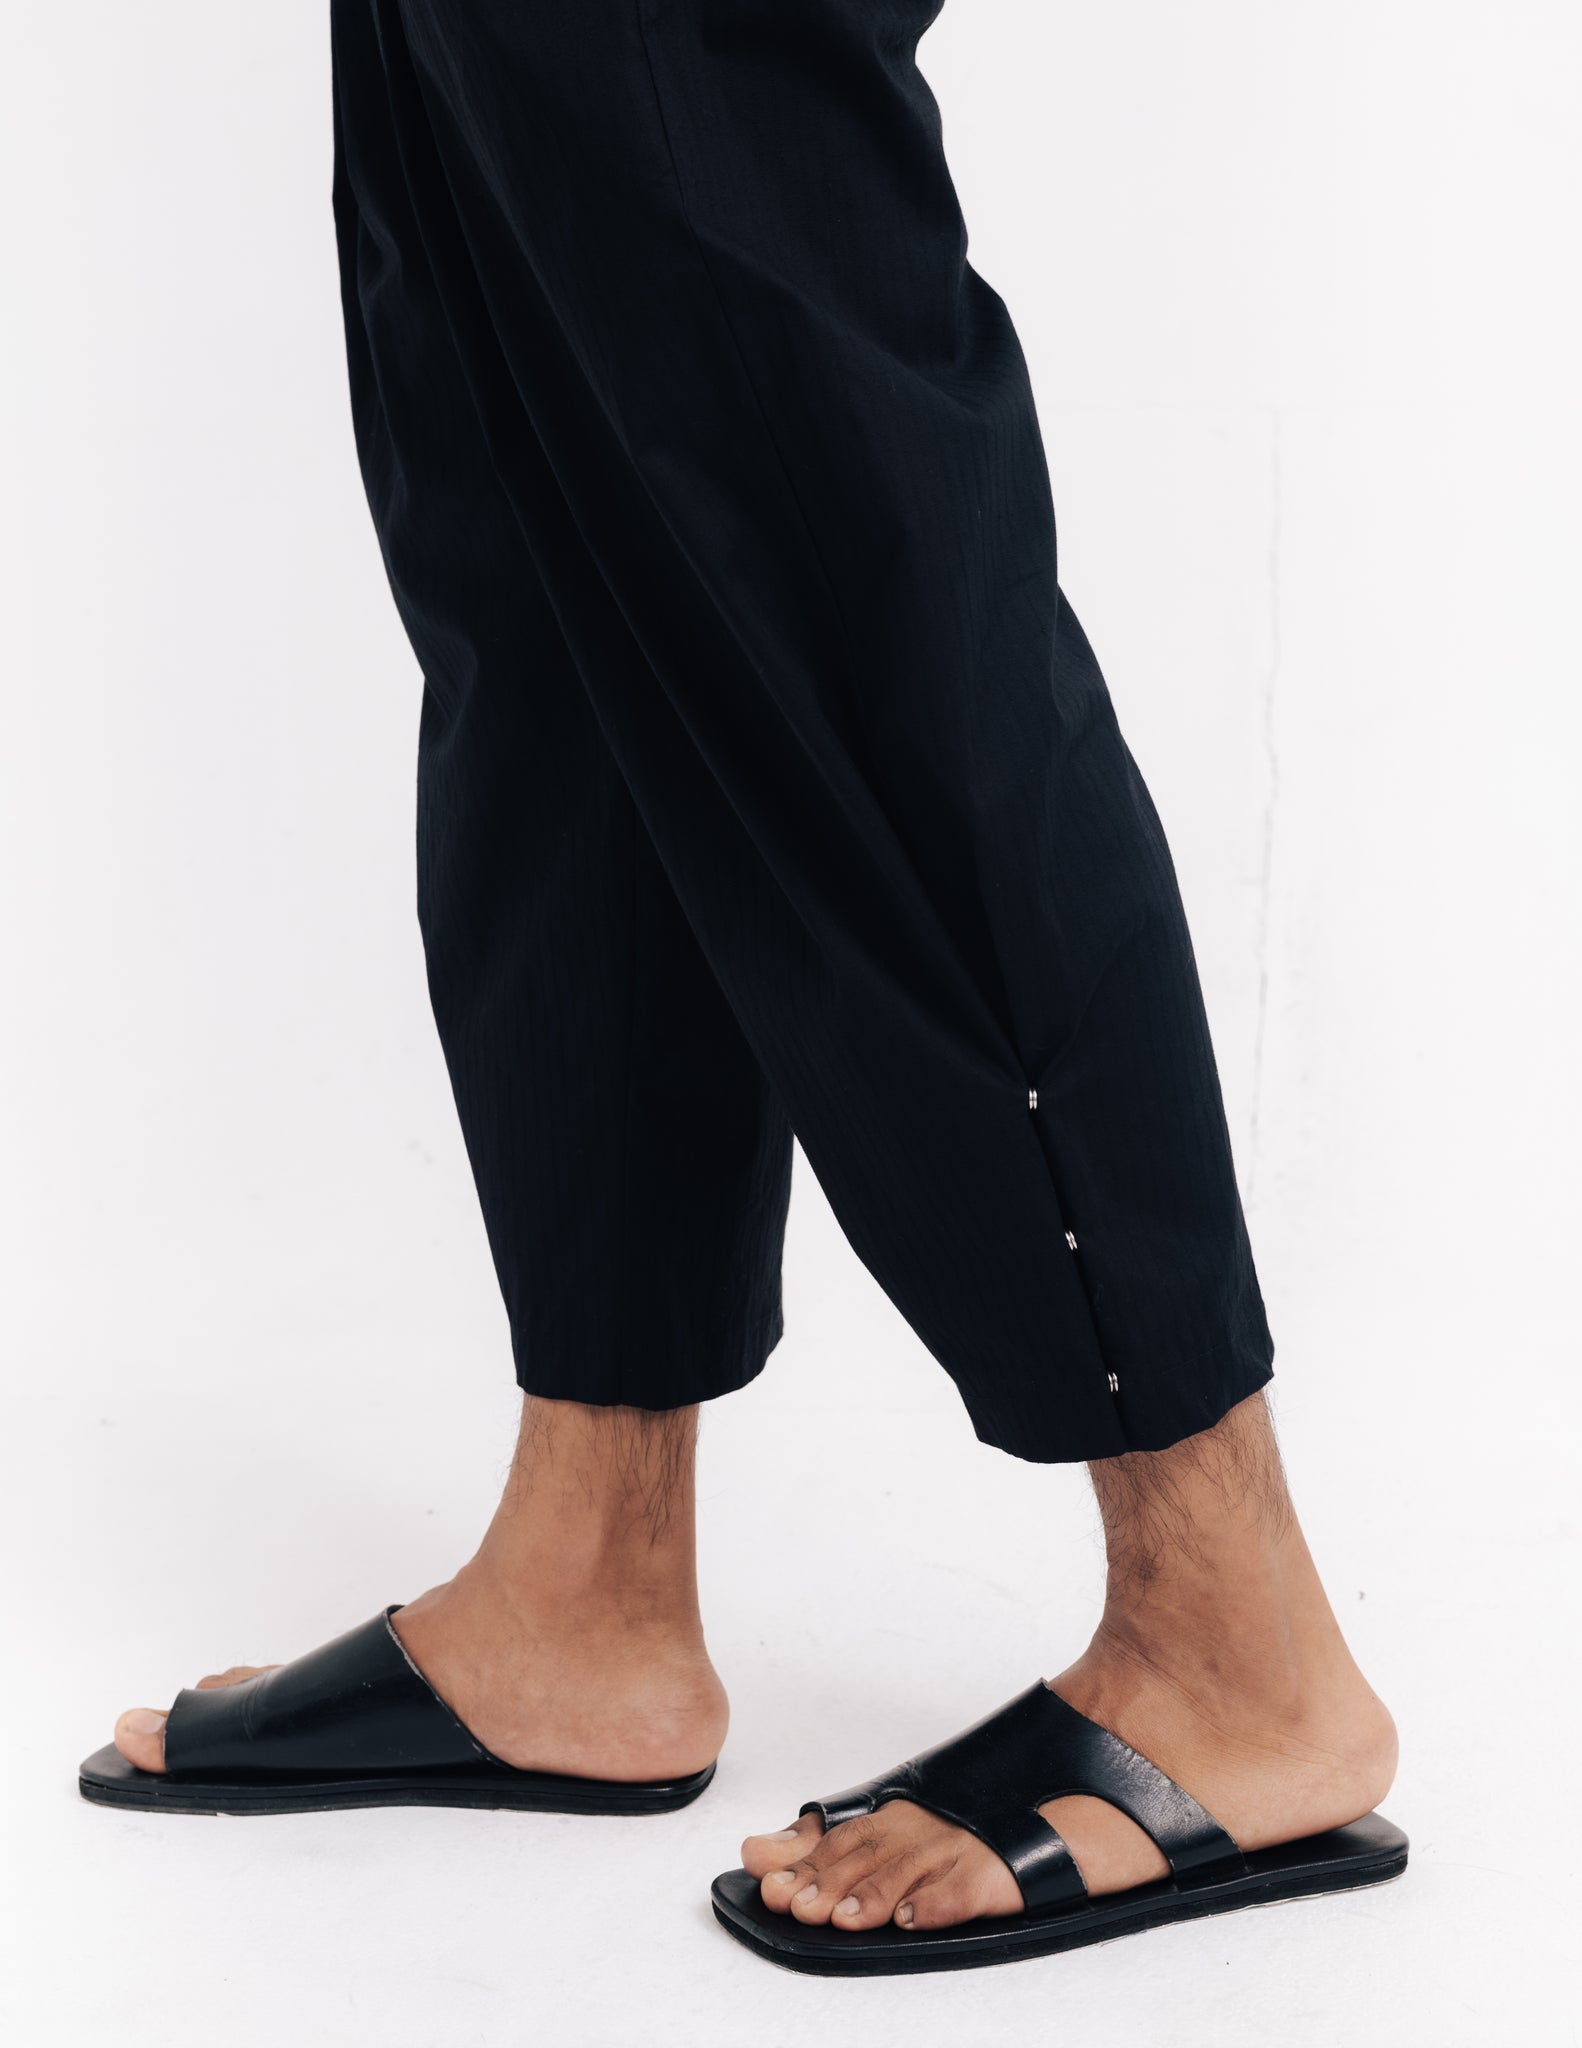 Men: Teladae Buttoned Pants (Black)